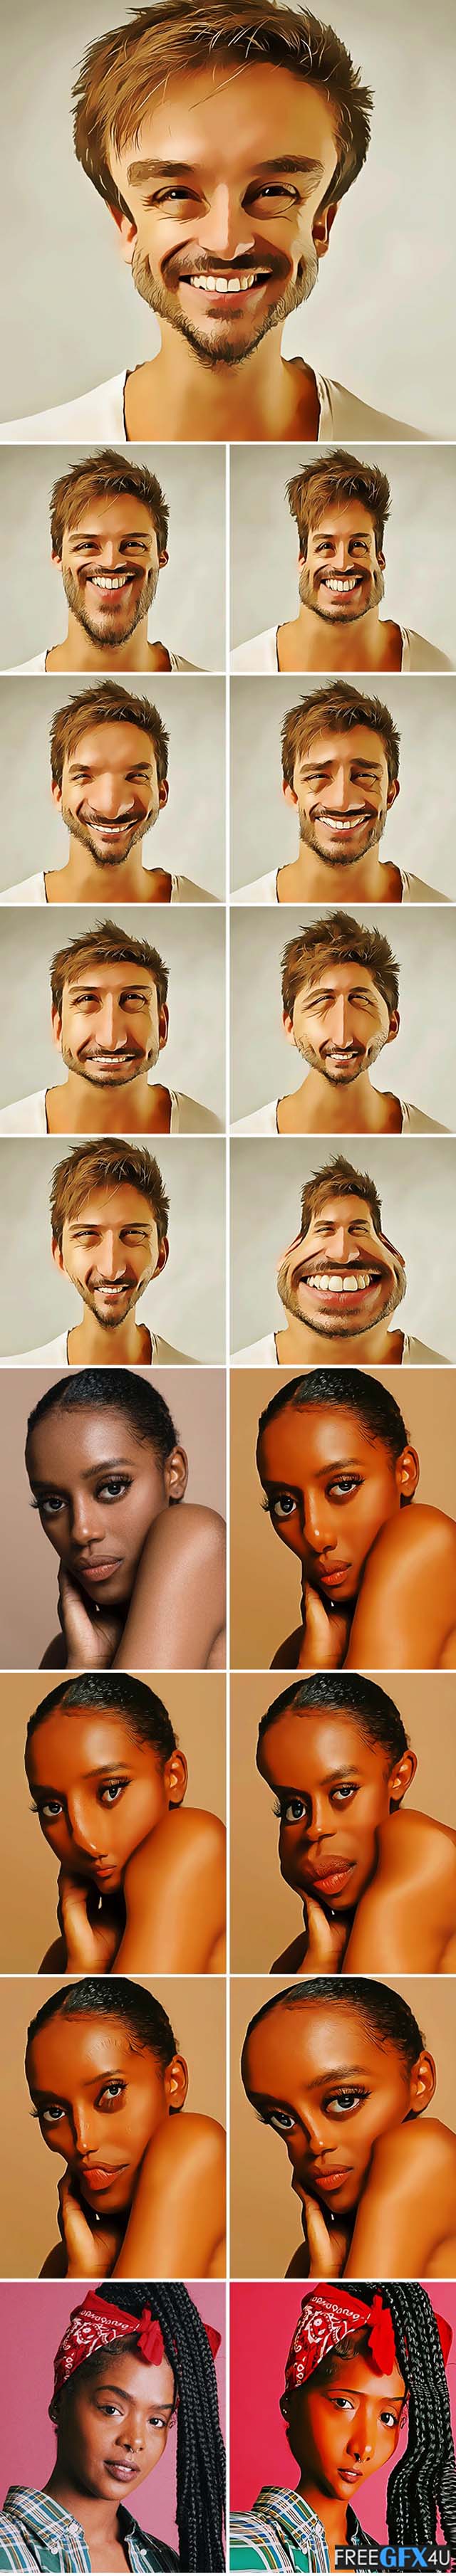 Caricature Face Photoshop Action